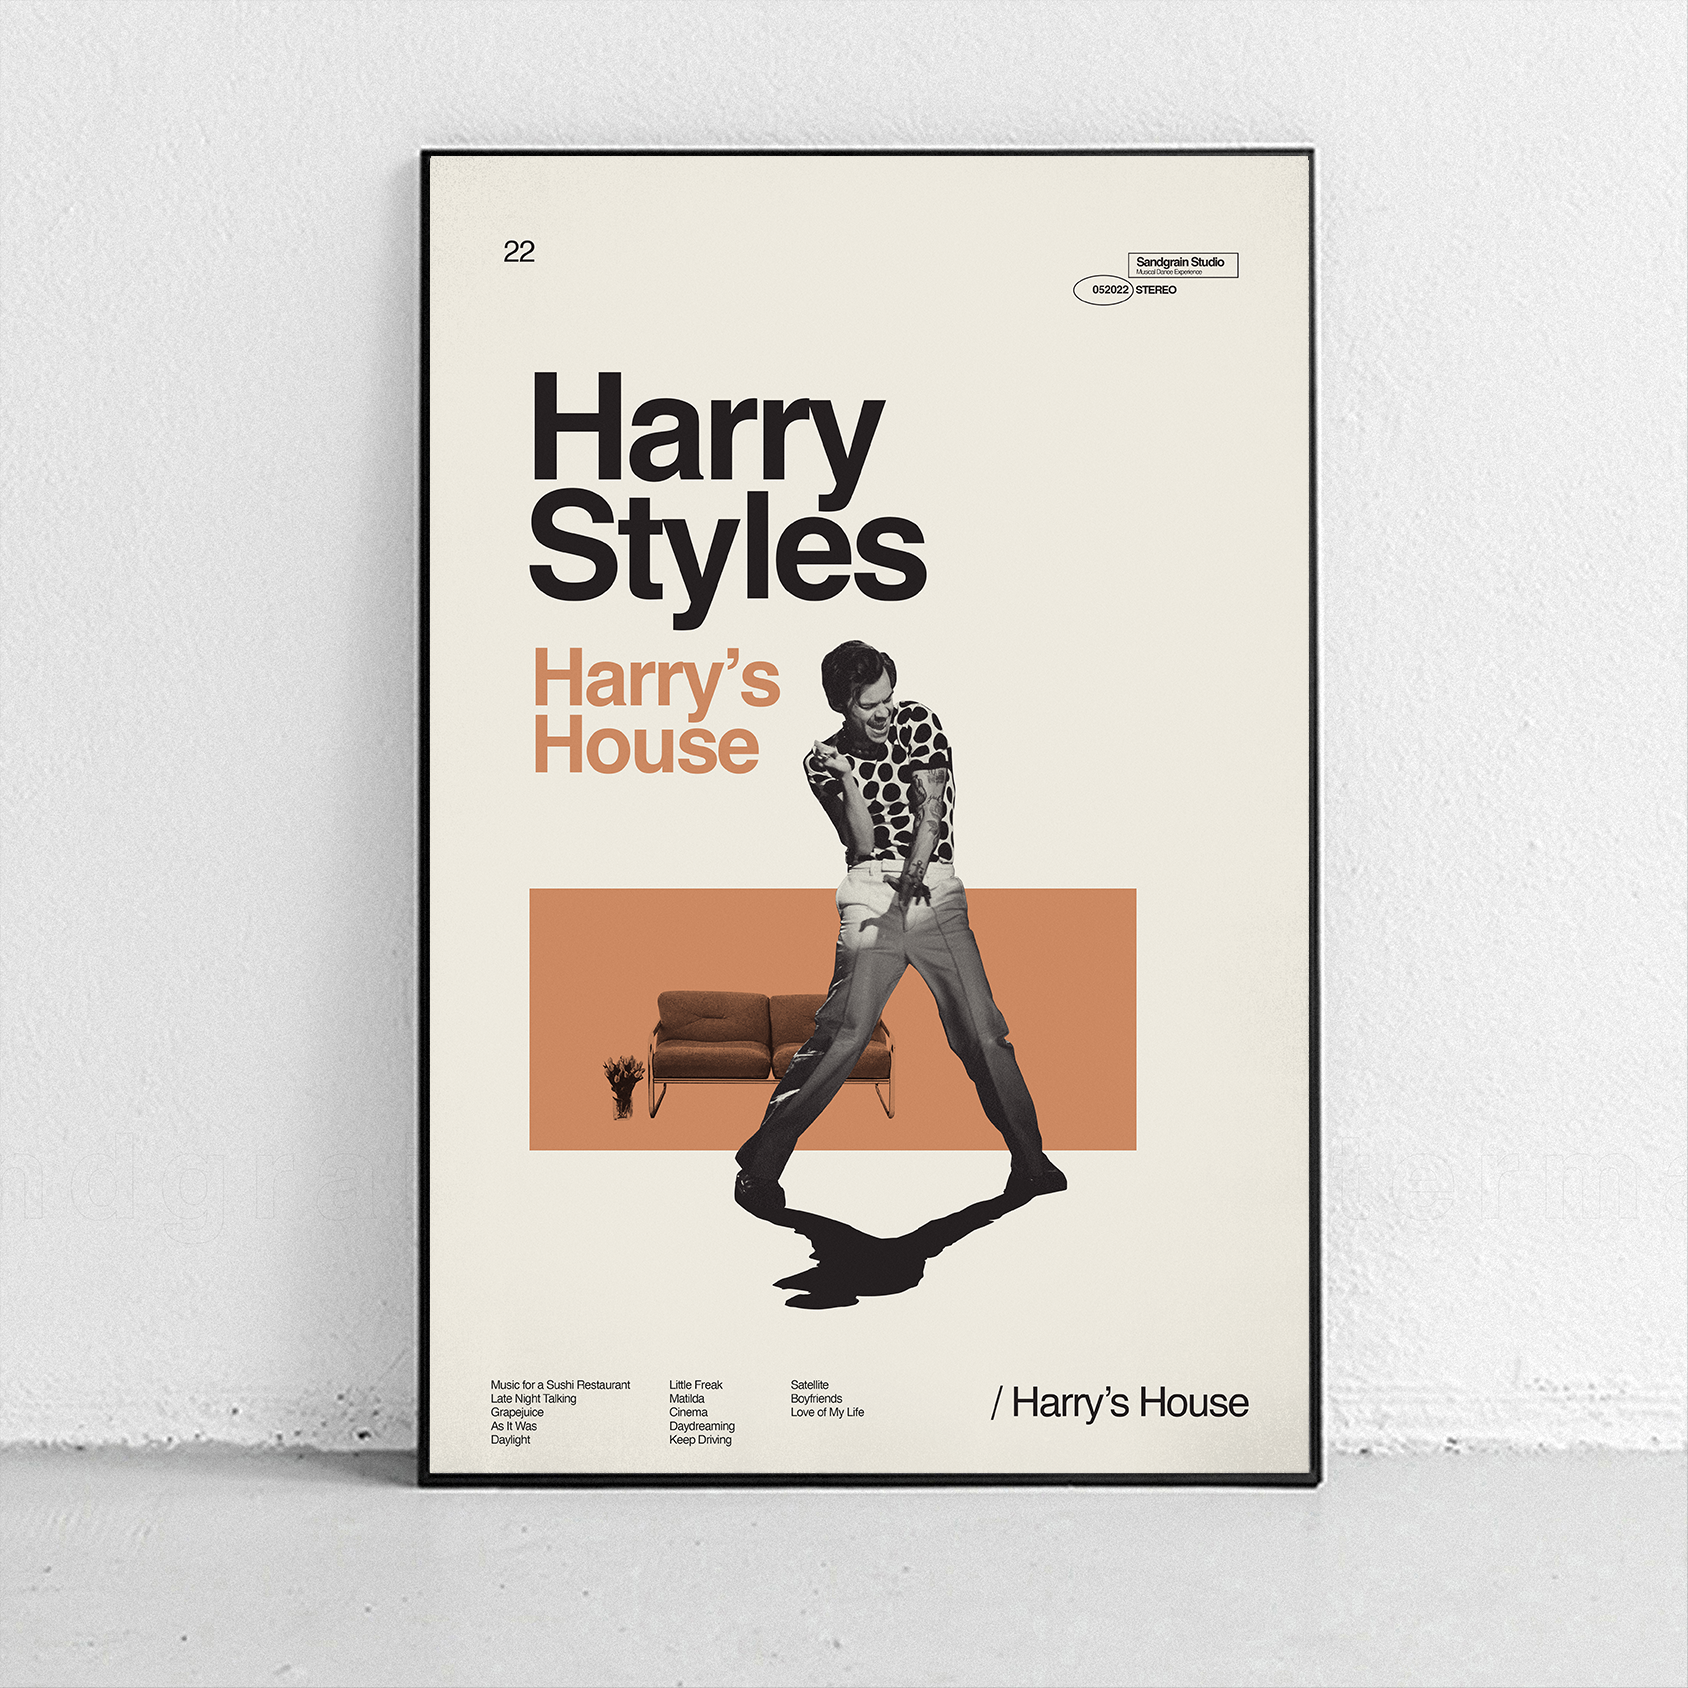 Harry's House